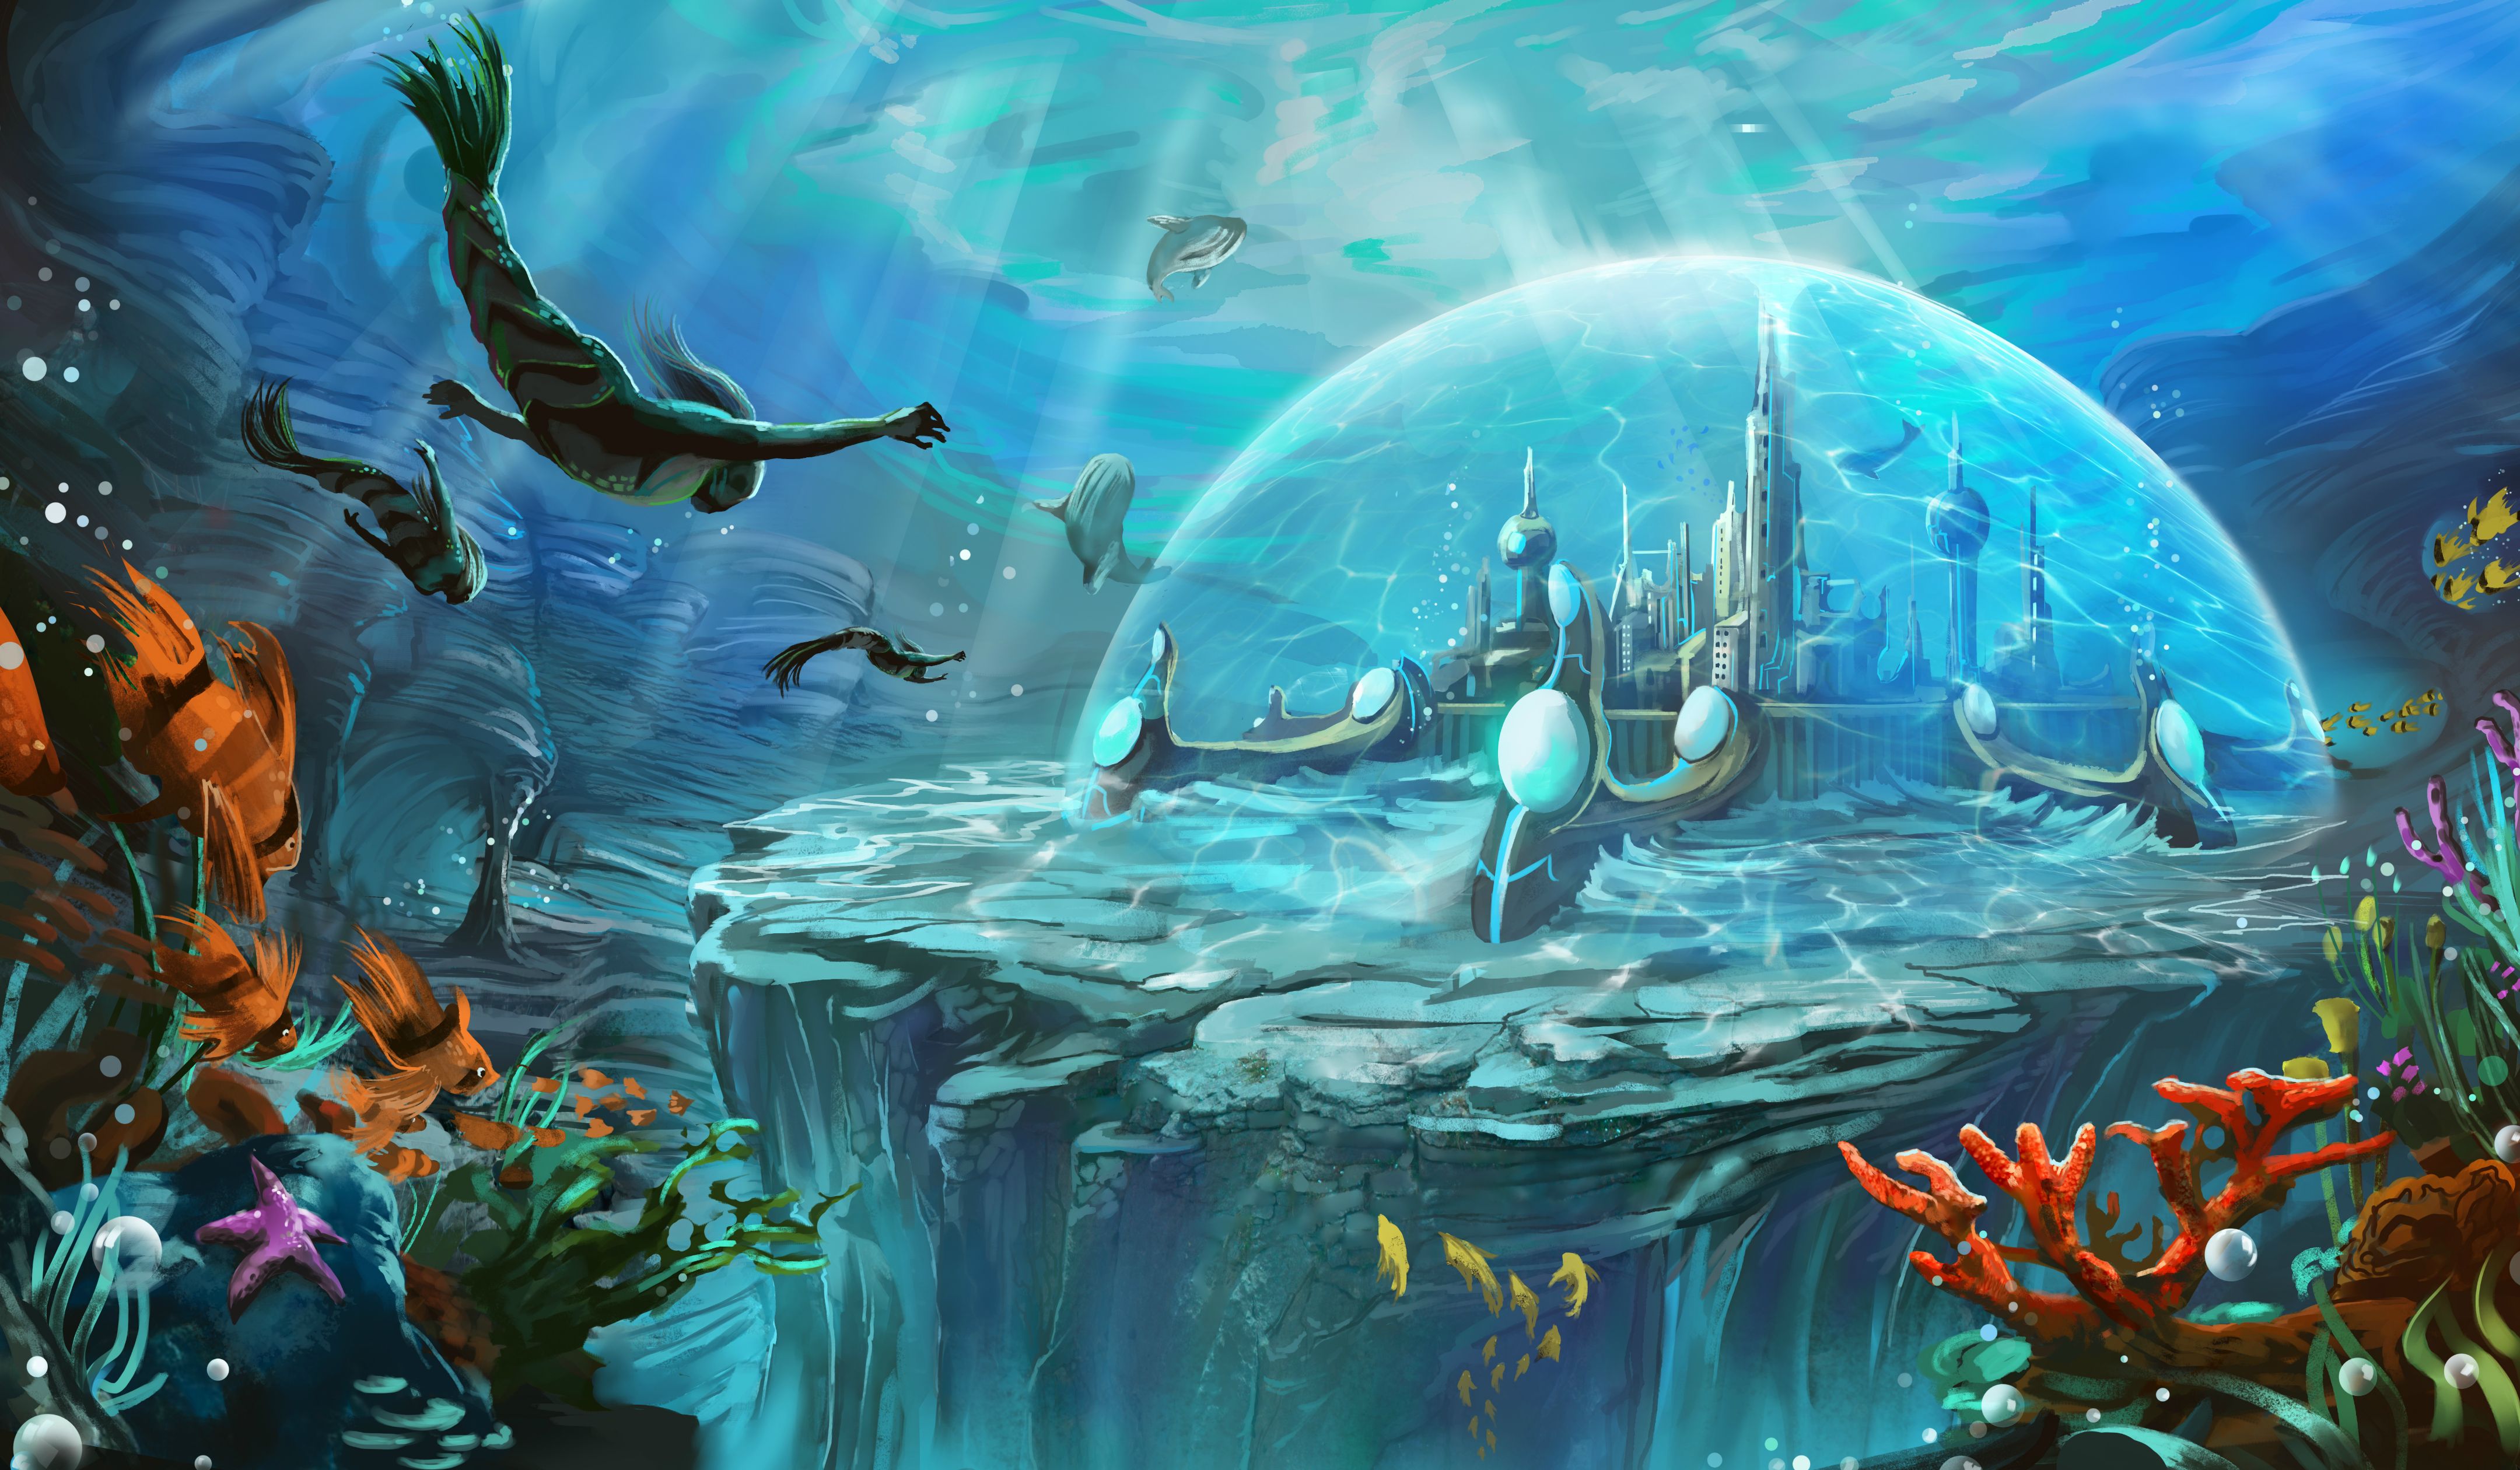 Atlantis Backgrounds on Wallpapers Vista